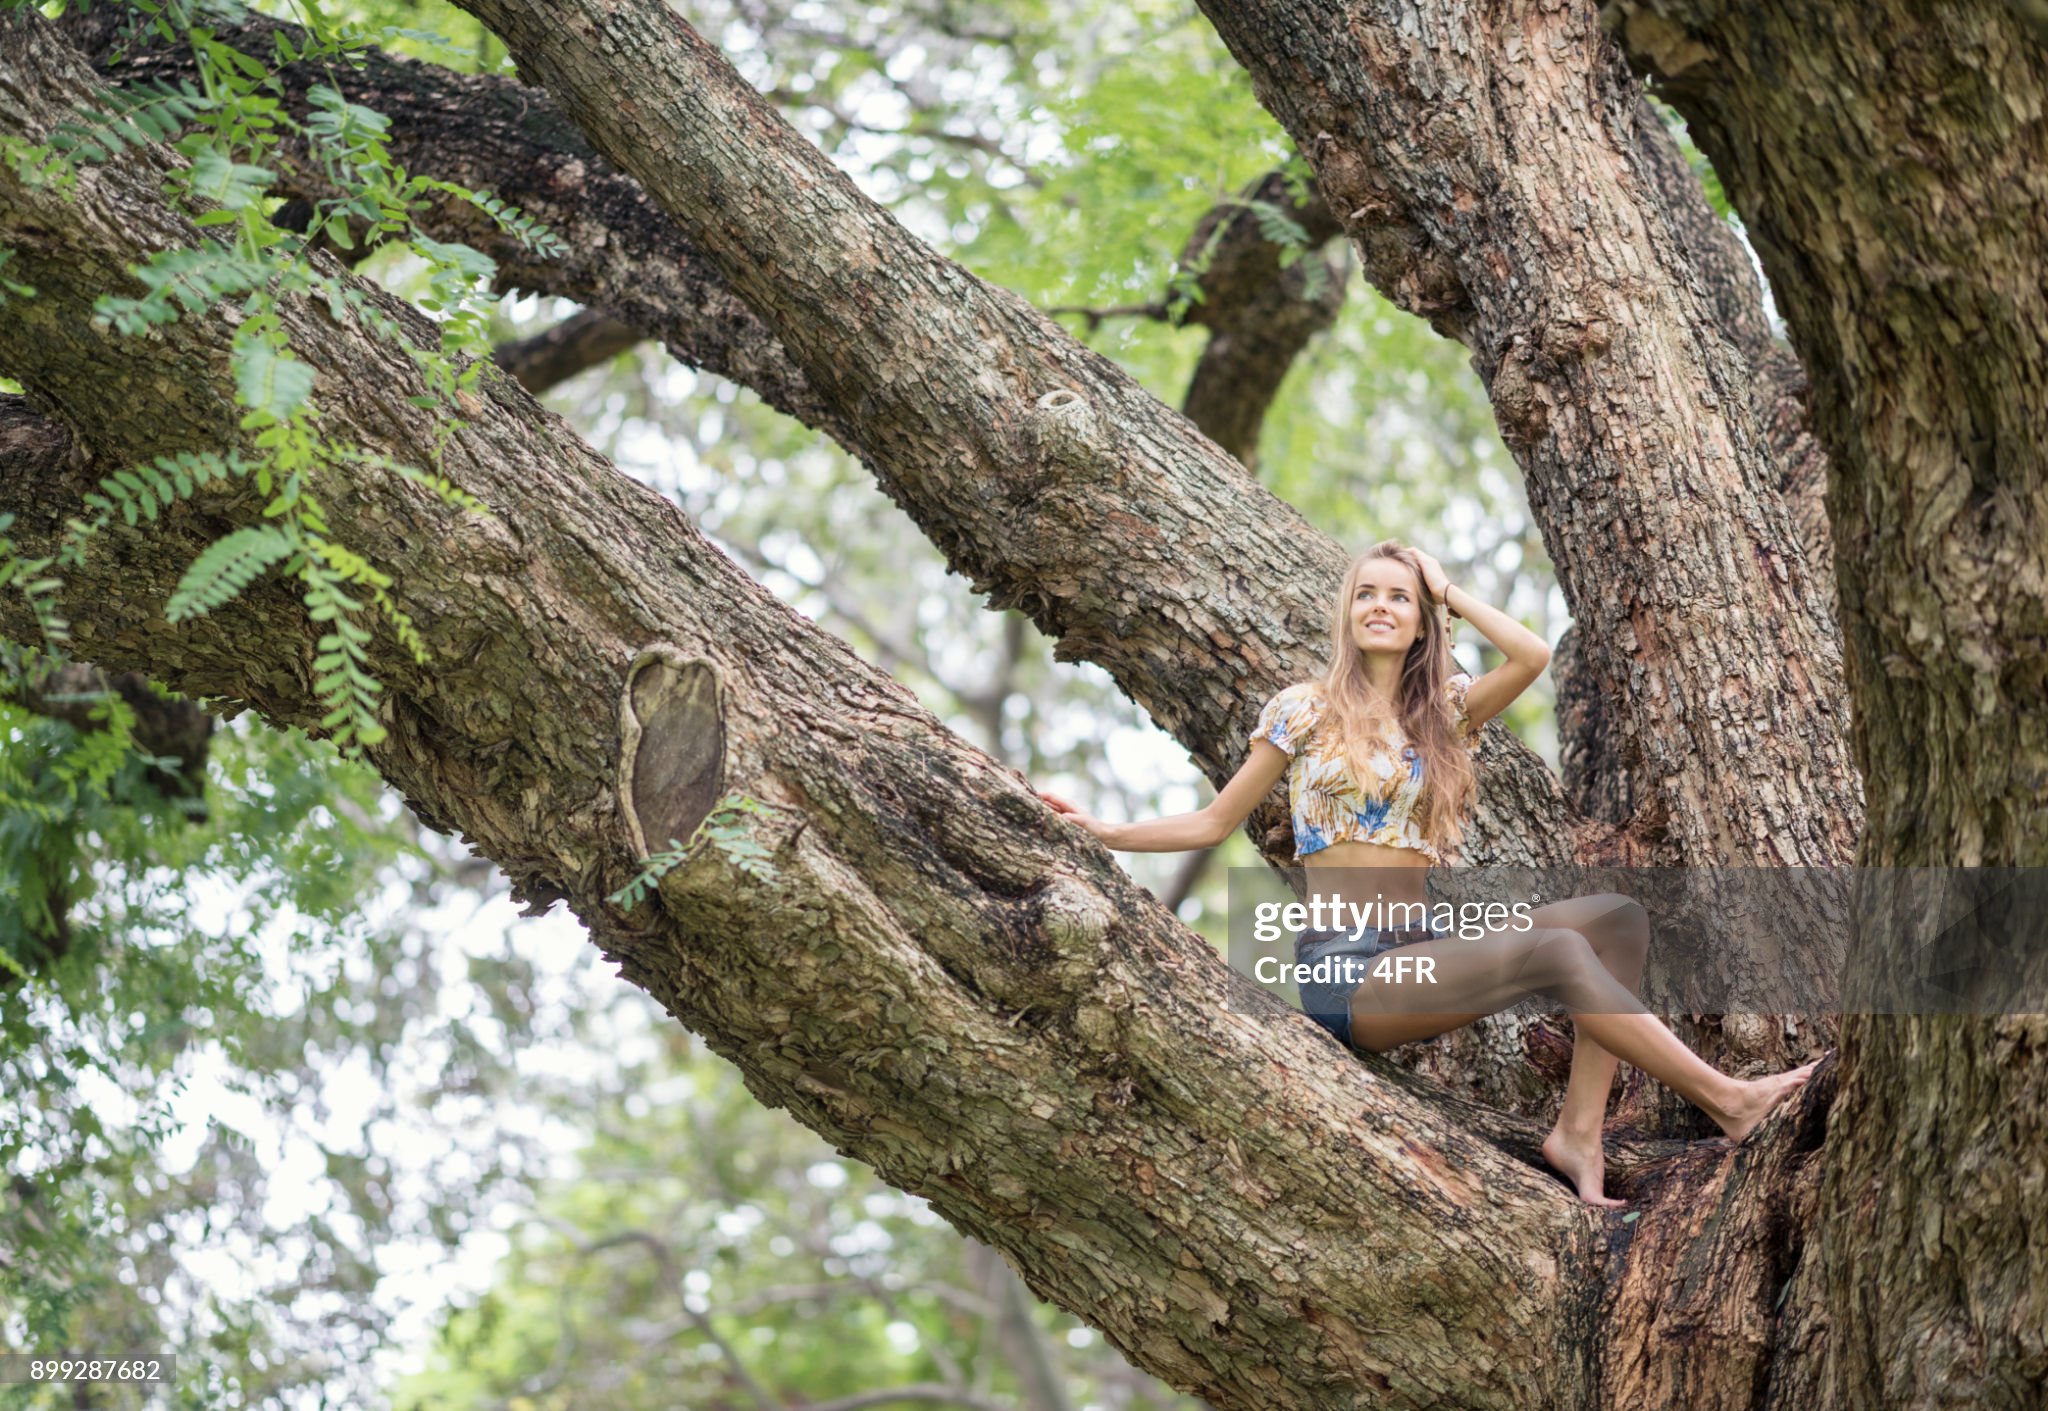 https://media.gettyimages.com/id/899287682/photo/beautiful-woman-sitting-up-in-a-huge-tree-fork-enjoying-nature.jpg?s=2048x2048&amp;w=gi&amp;k=20&amp;c=_tfKADWs-X7QJTaj08VClbVwkEFaLStyLXmdWDq5CV4=